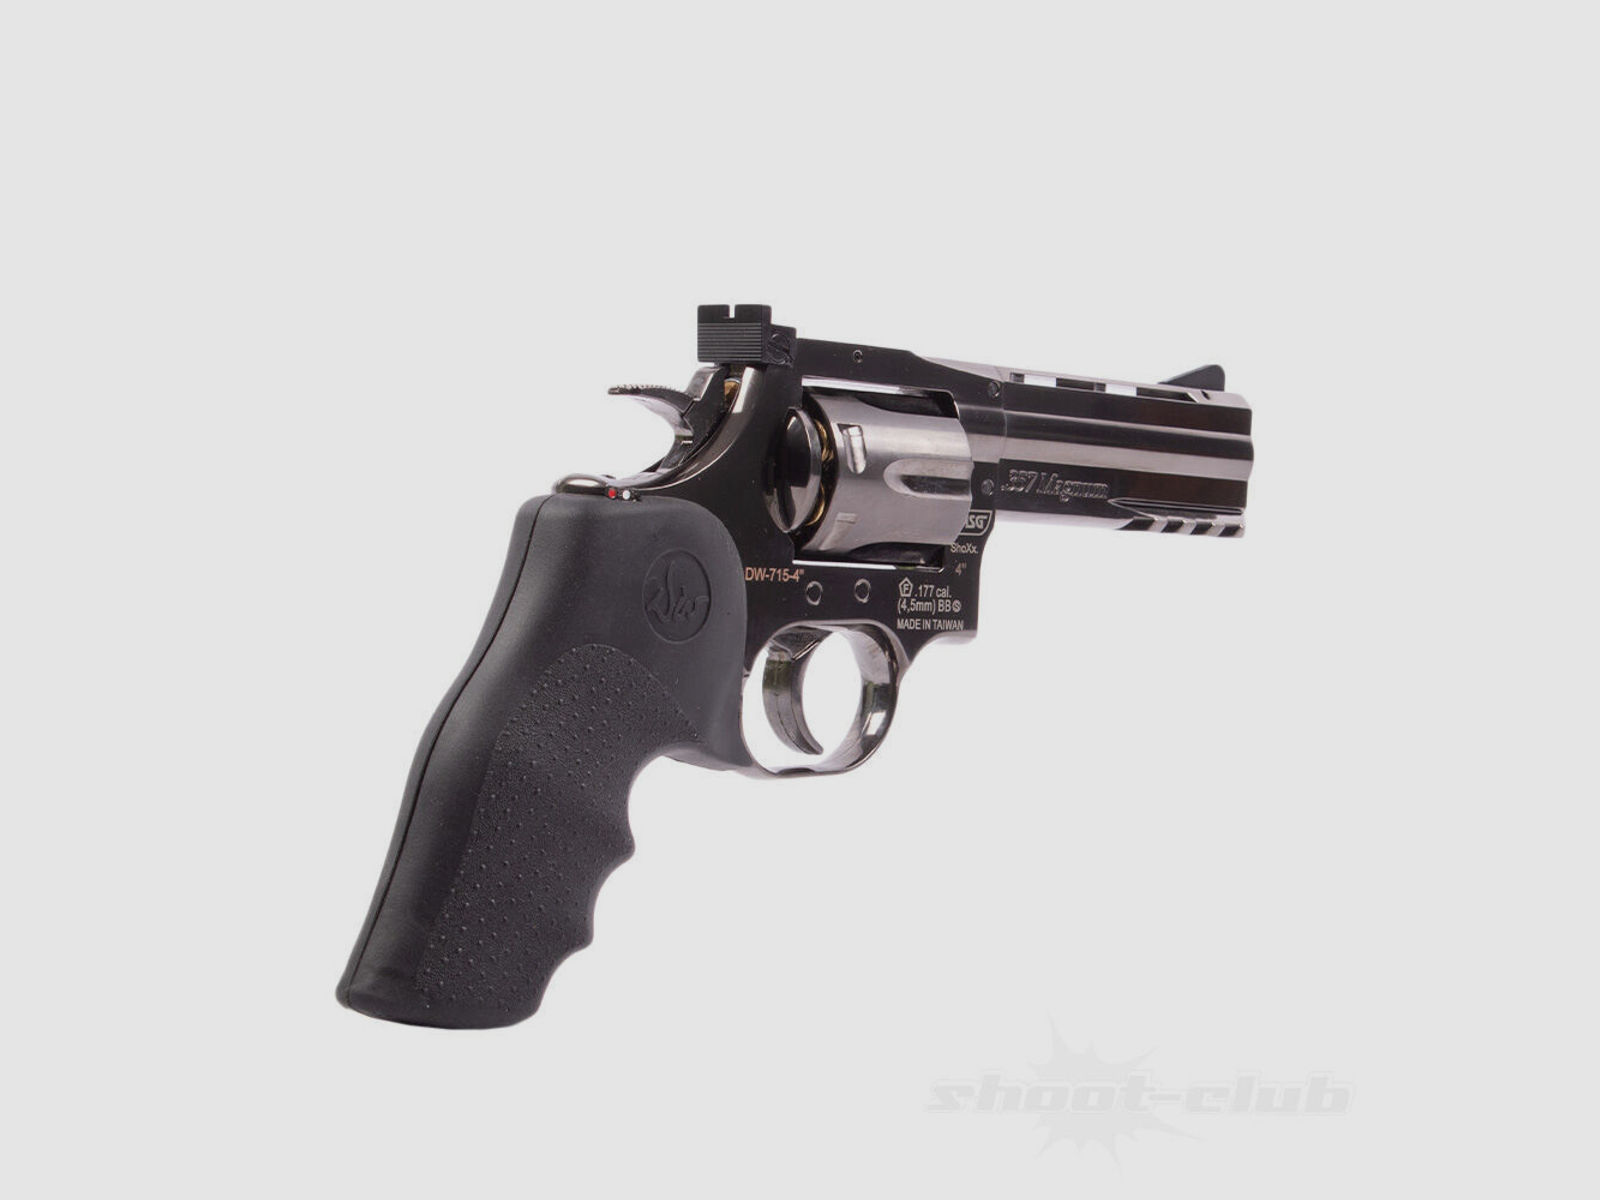 ASG Dan Wesson 715 4 Zoll Co2 Revolver 4,5 mm BB Steel Grey